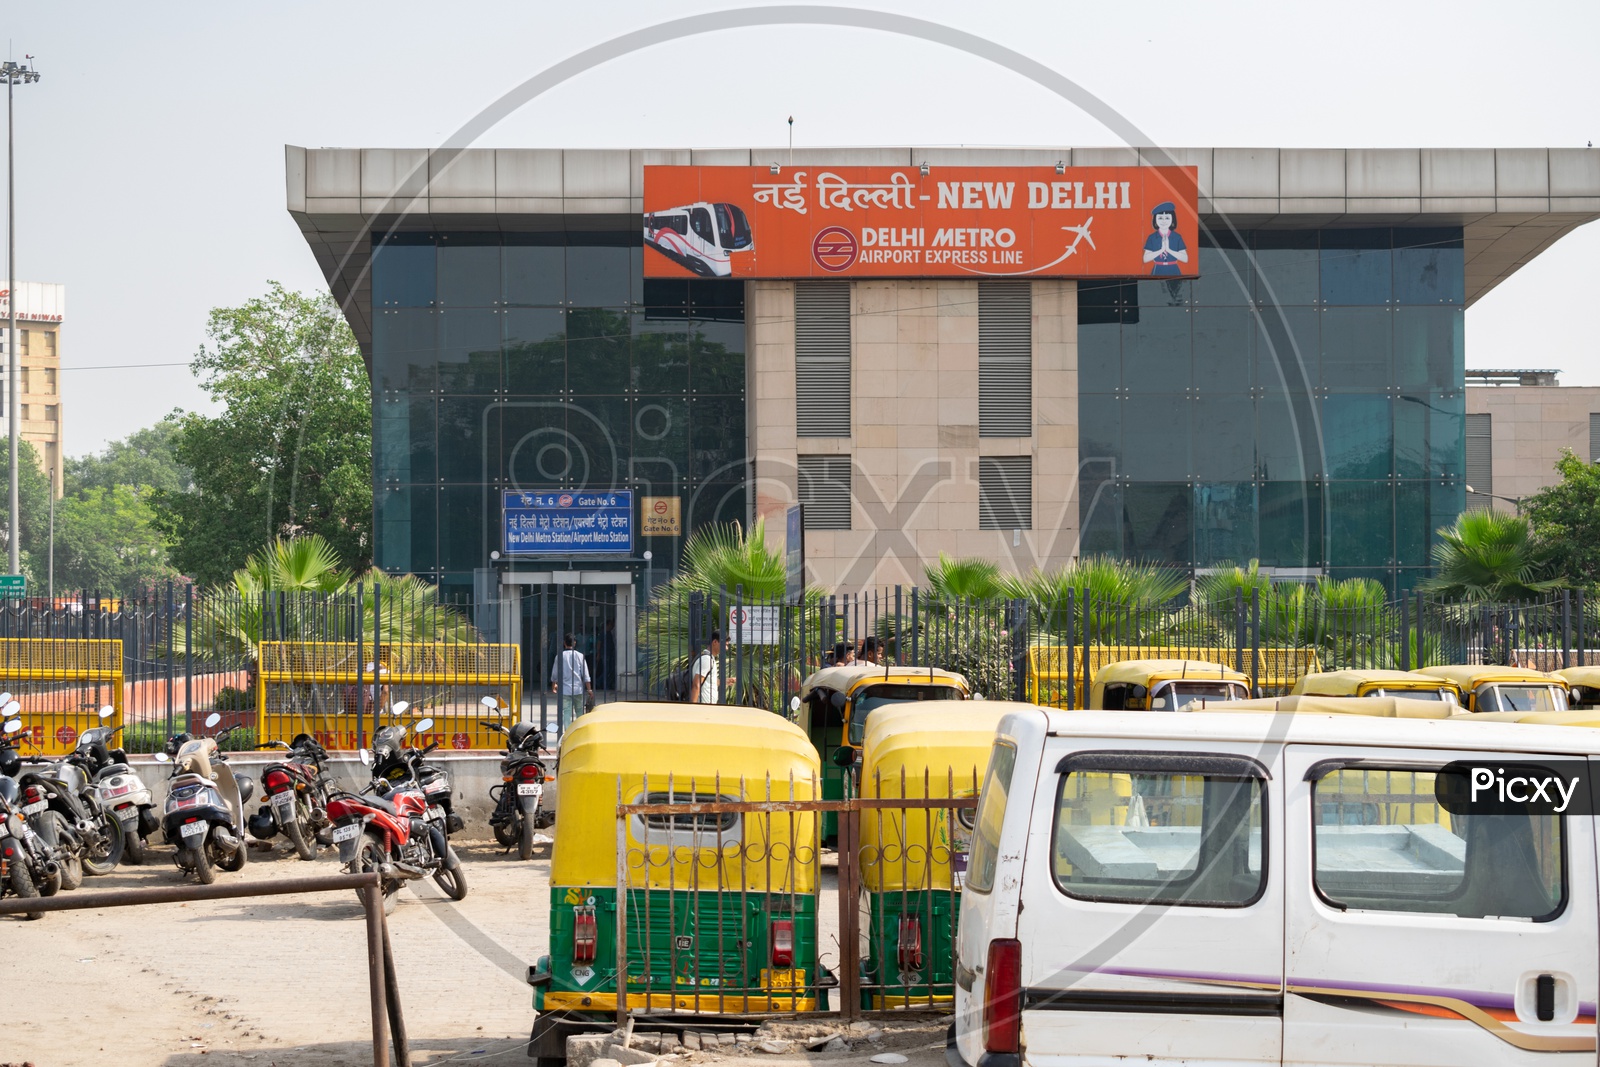 New Delhi Metro Station. Airport Express Line.